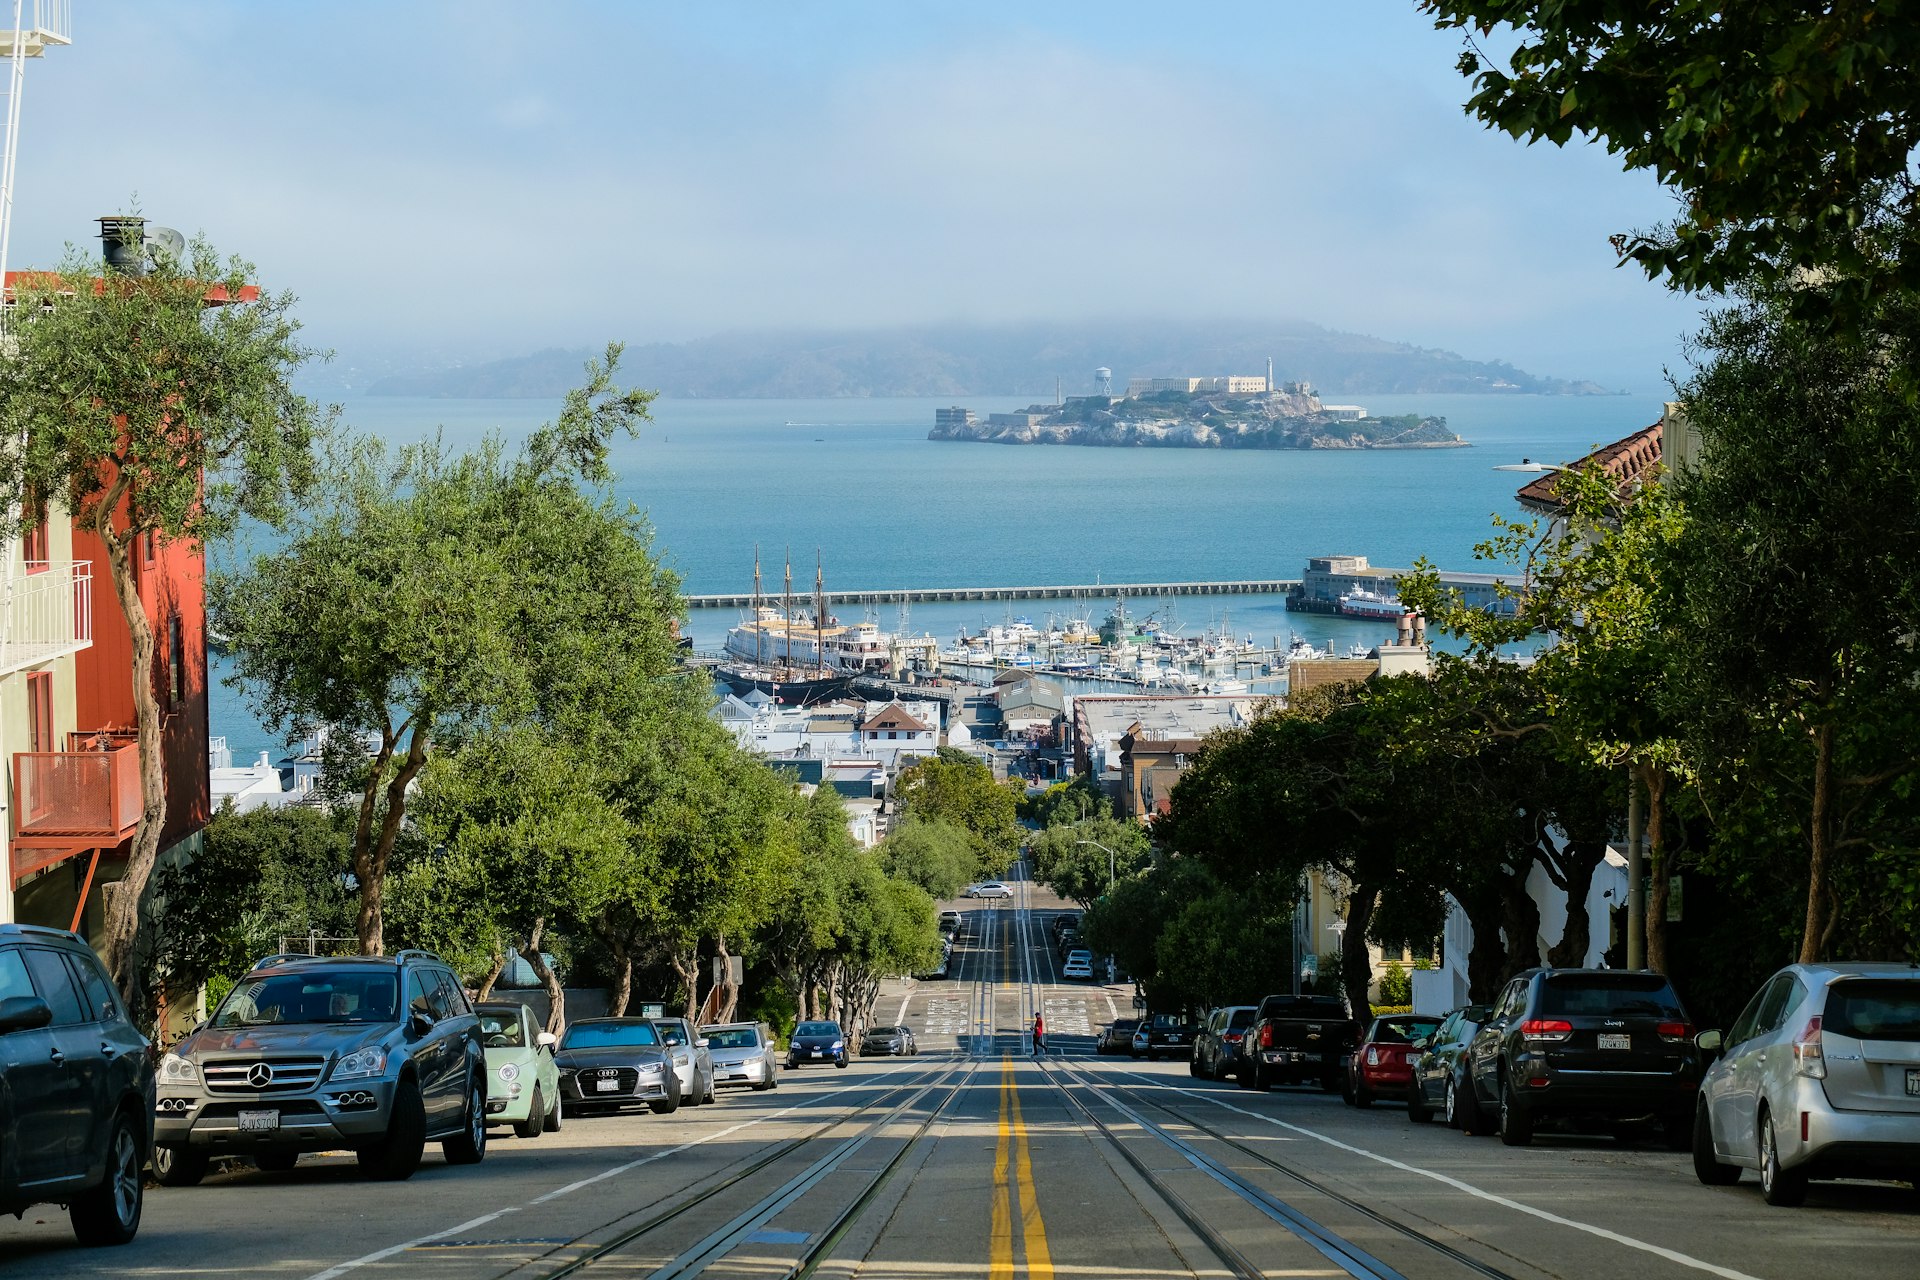 View of Alcatraz down a steep street in San Francisco, California